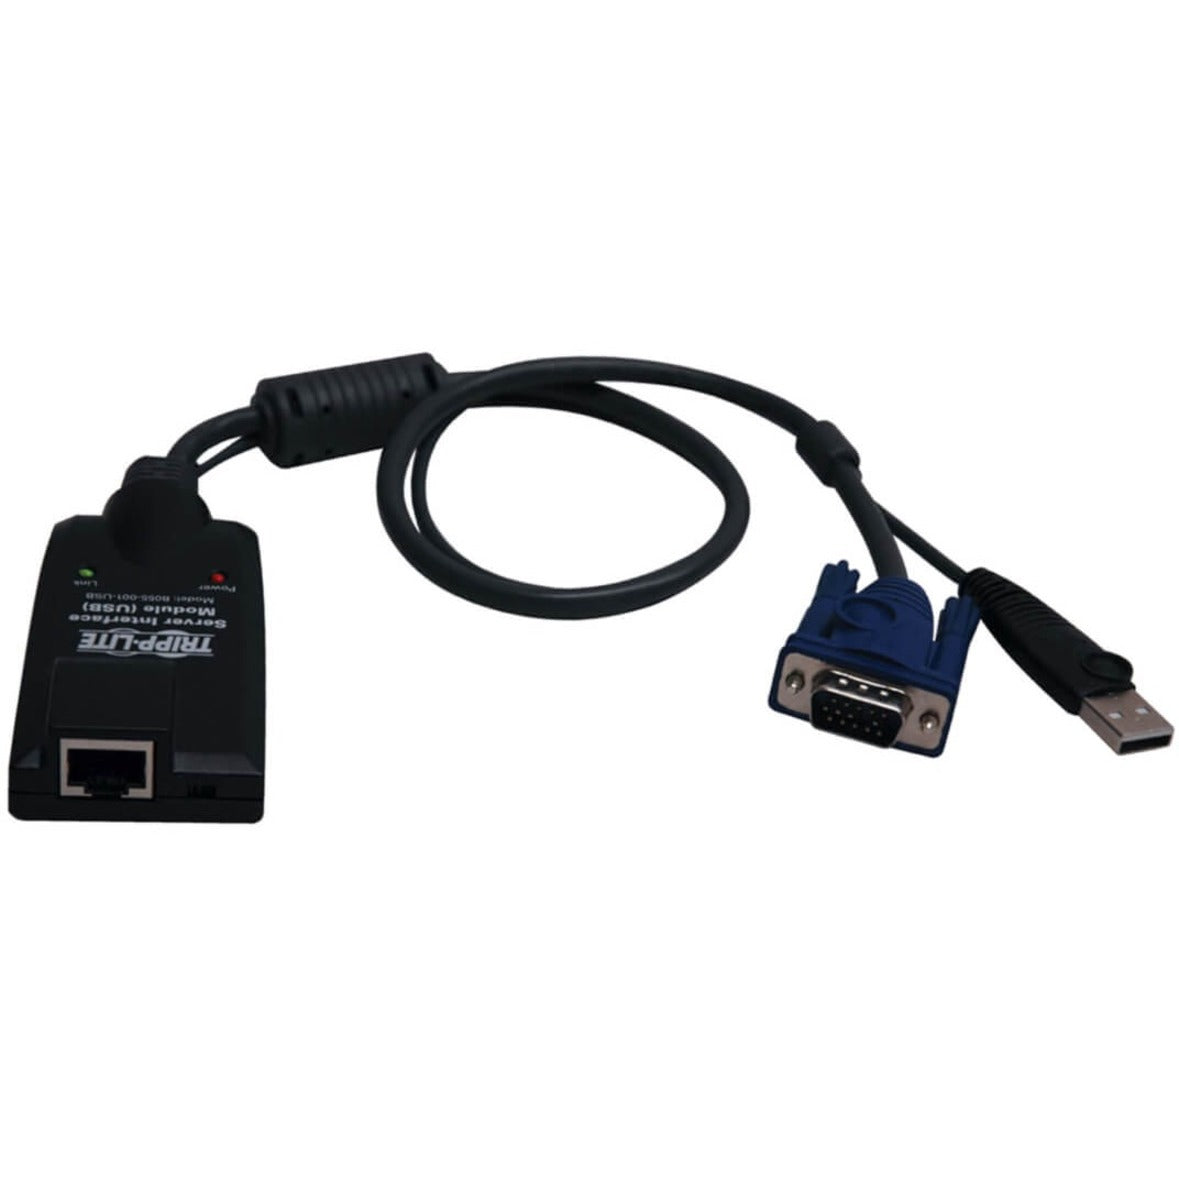 Tripp Lite B055-001-USB-V2 NetDirector サーバーインターフェースモジュールケーブルアダプタ、データ転送ケーブル